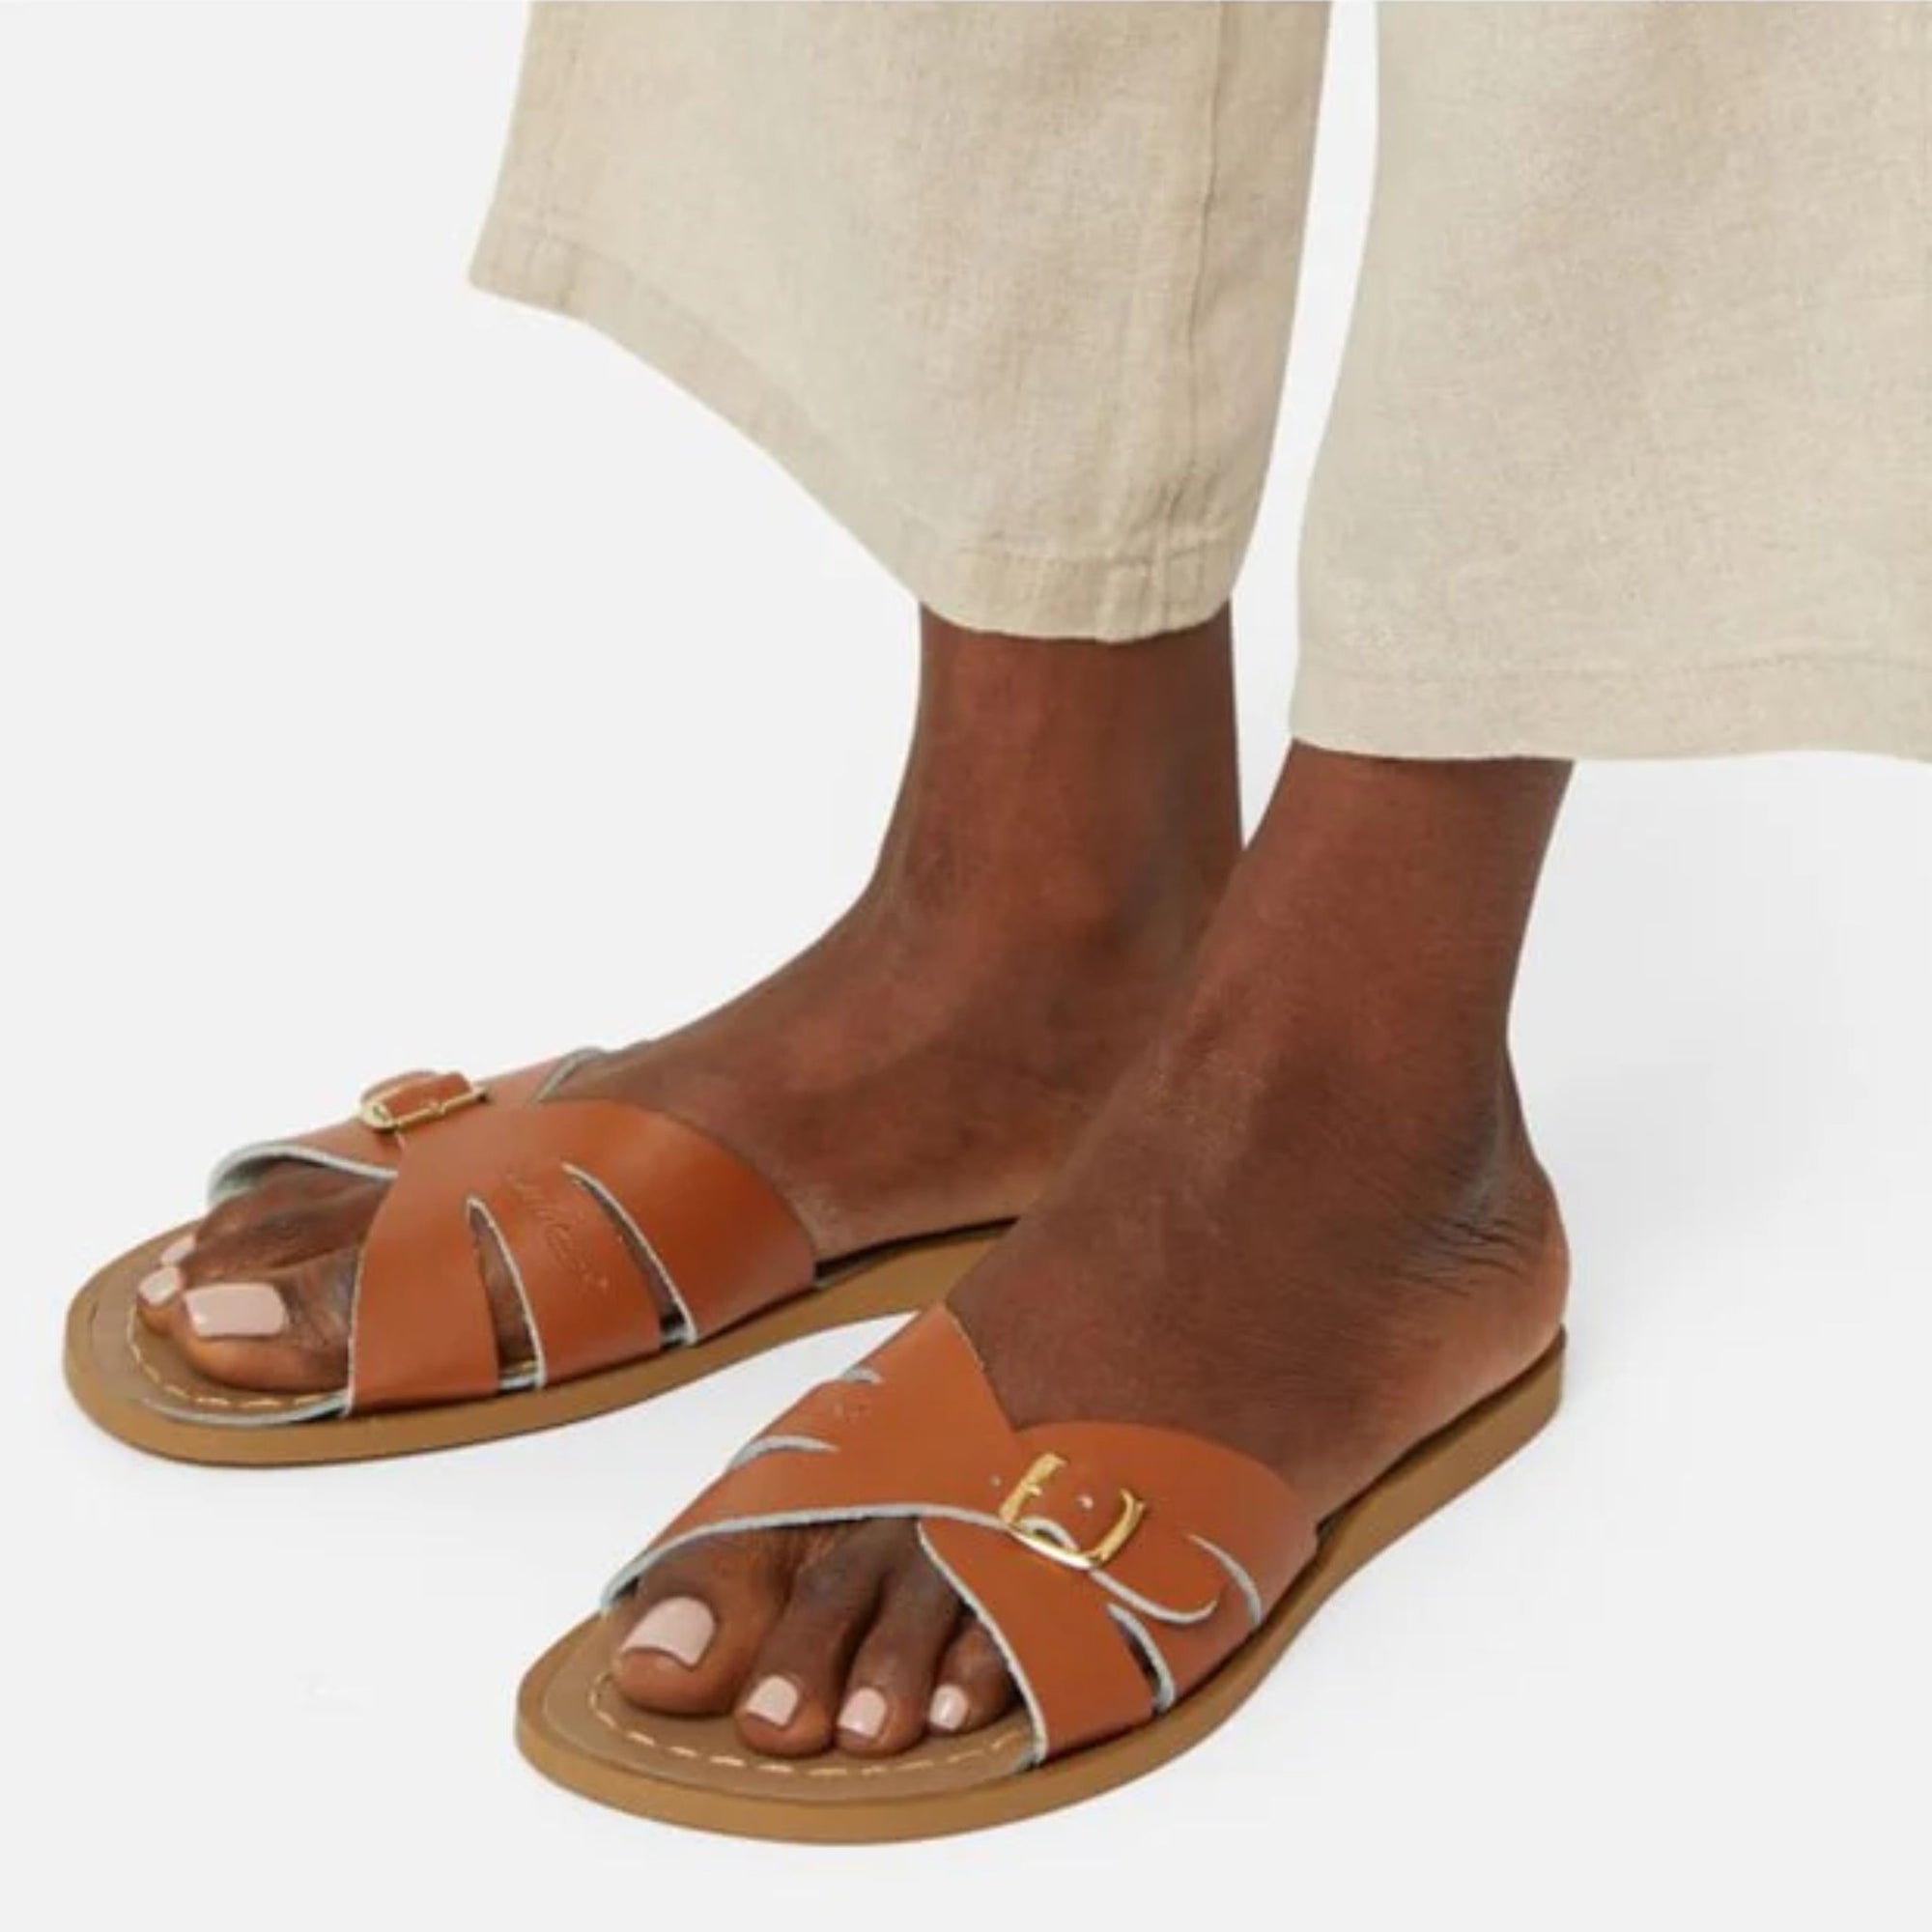 Salt-water Sandals Classic Slide Adult - Tan